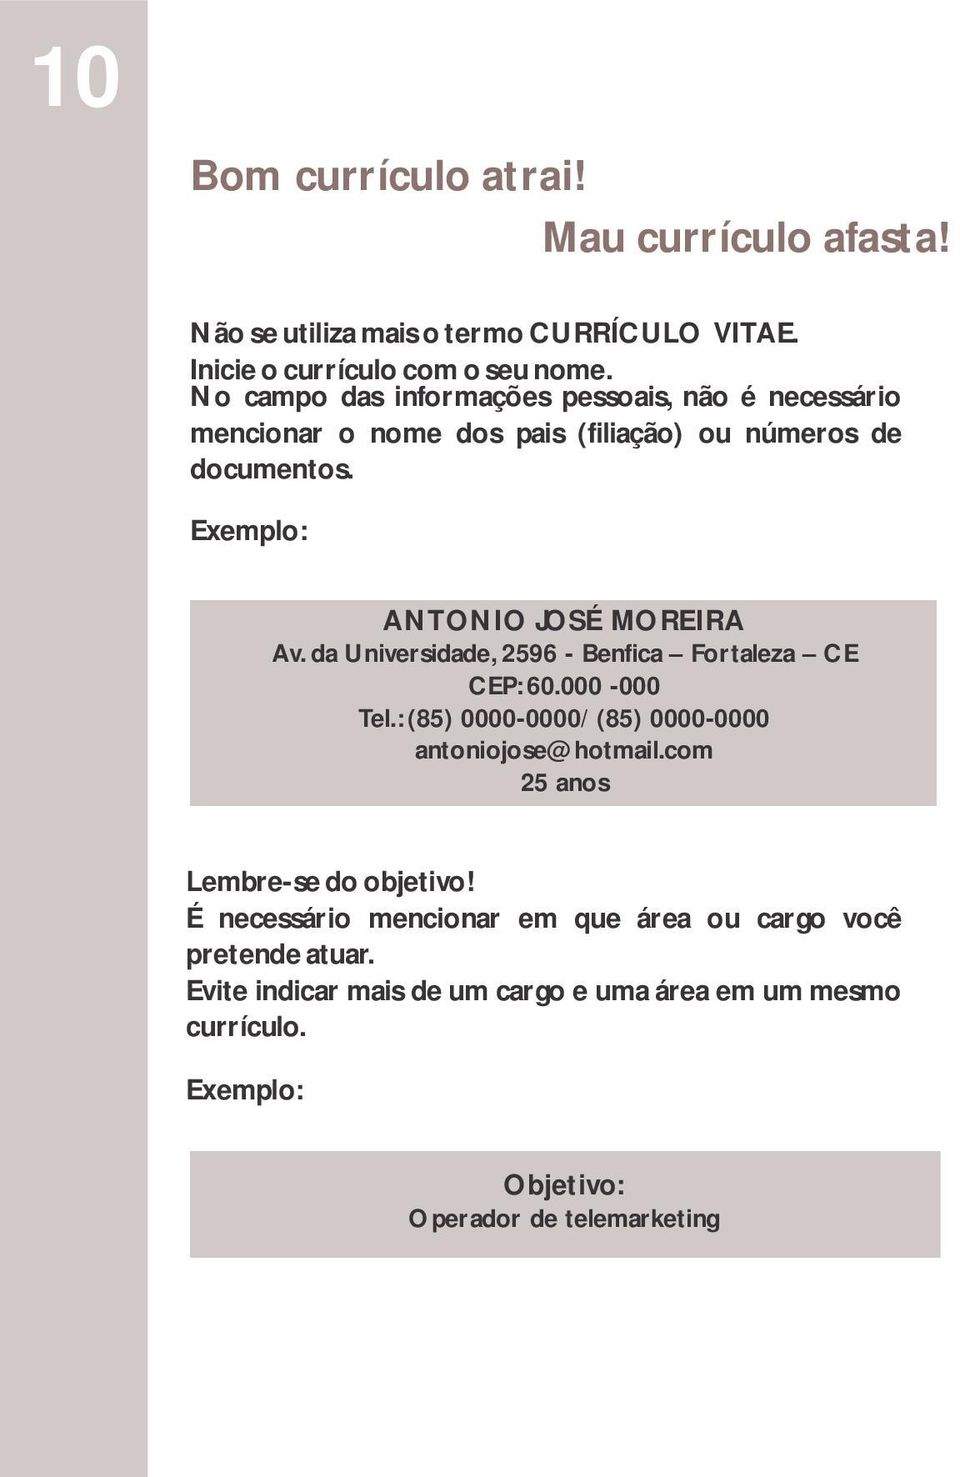 da Universidade, 2596 - Benfica Fortaleza CE CEP: 60.000-000 Tel.: (85) 0000-0000/ (85) 0000-0000 antoniojose@hotmail.